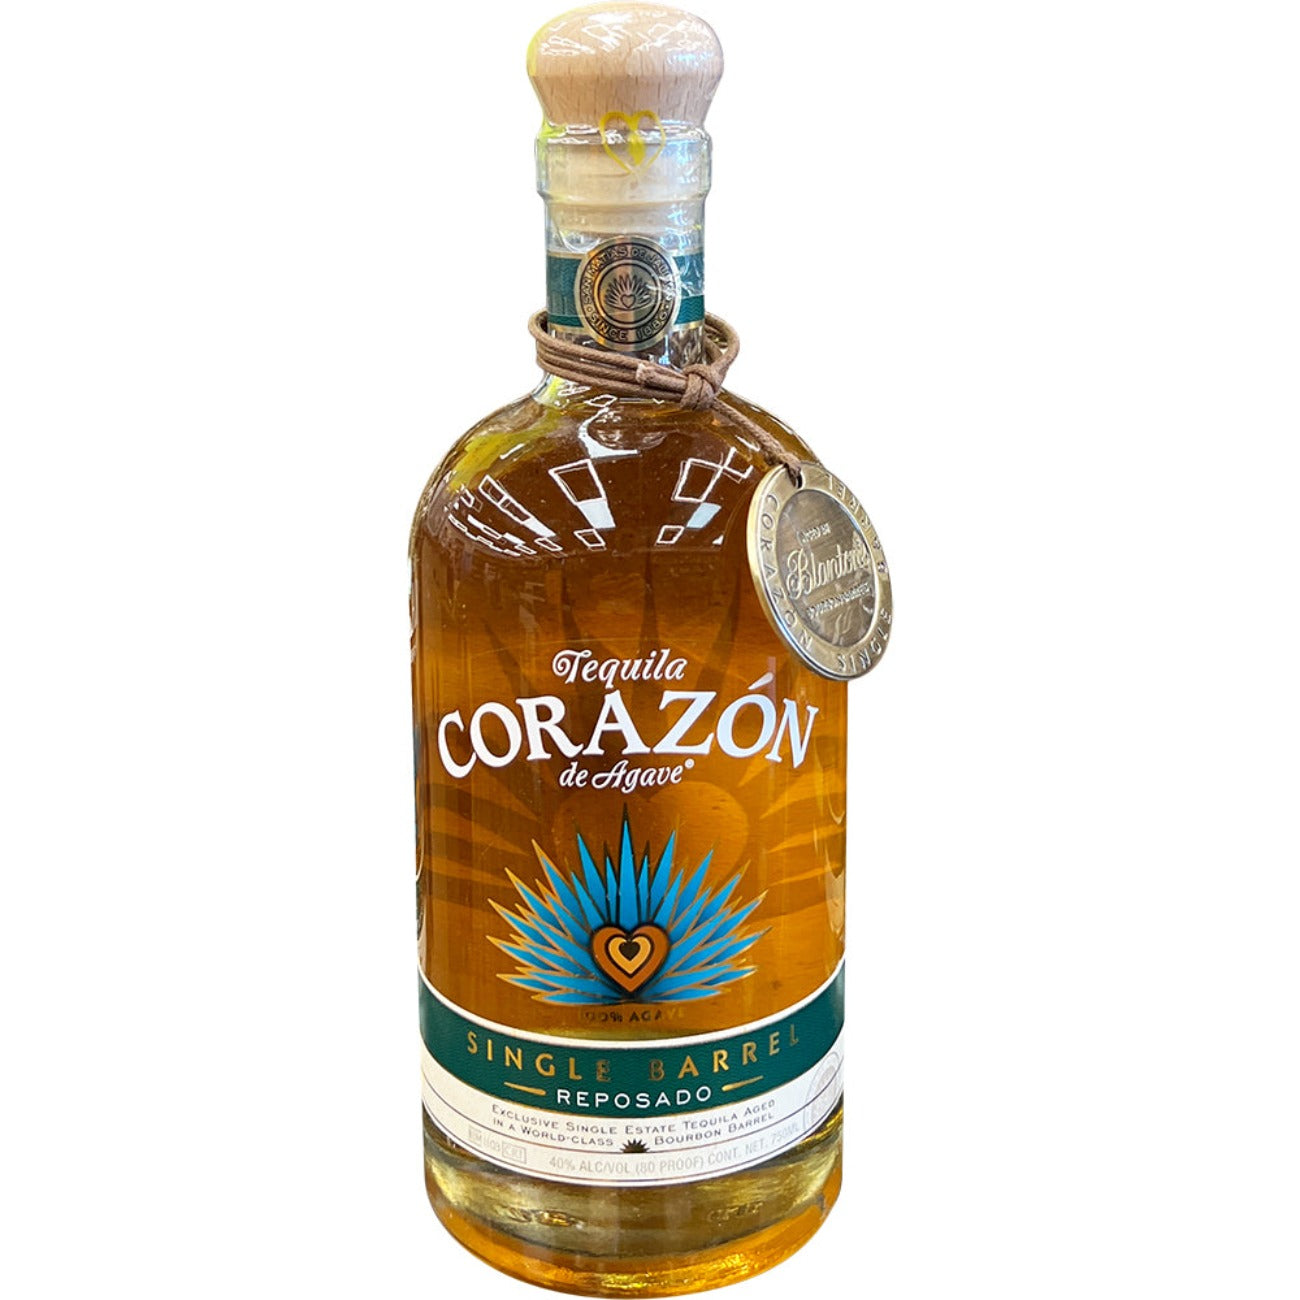 Corazon | Tequila Single Barrel Reposado William Larue Weller Barrel Aged